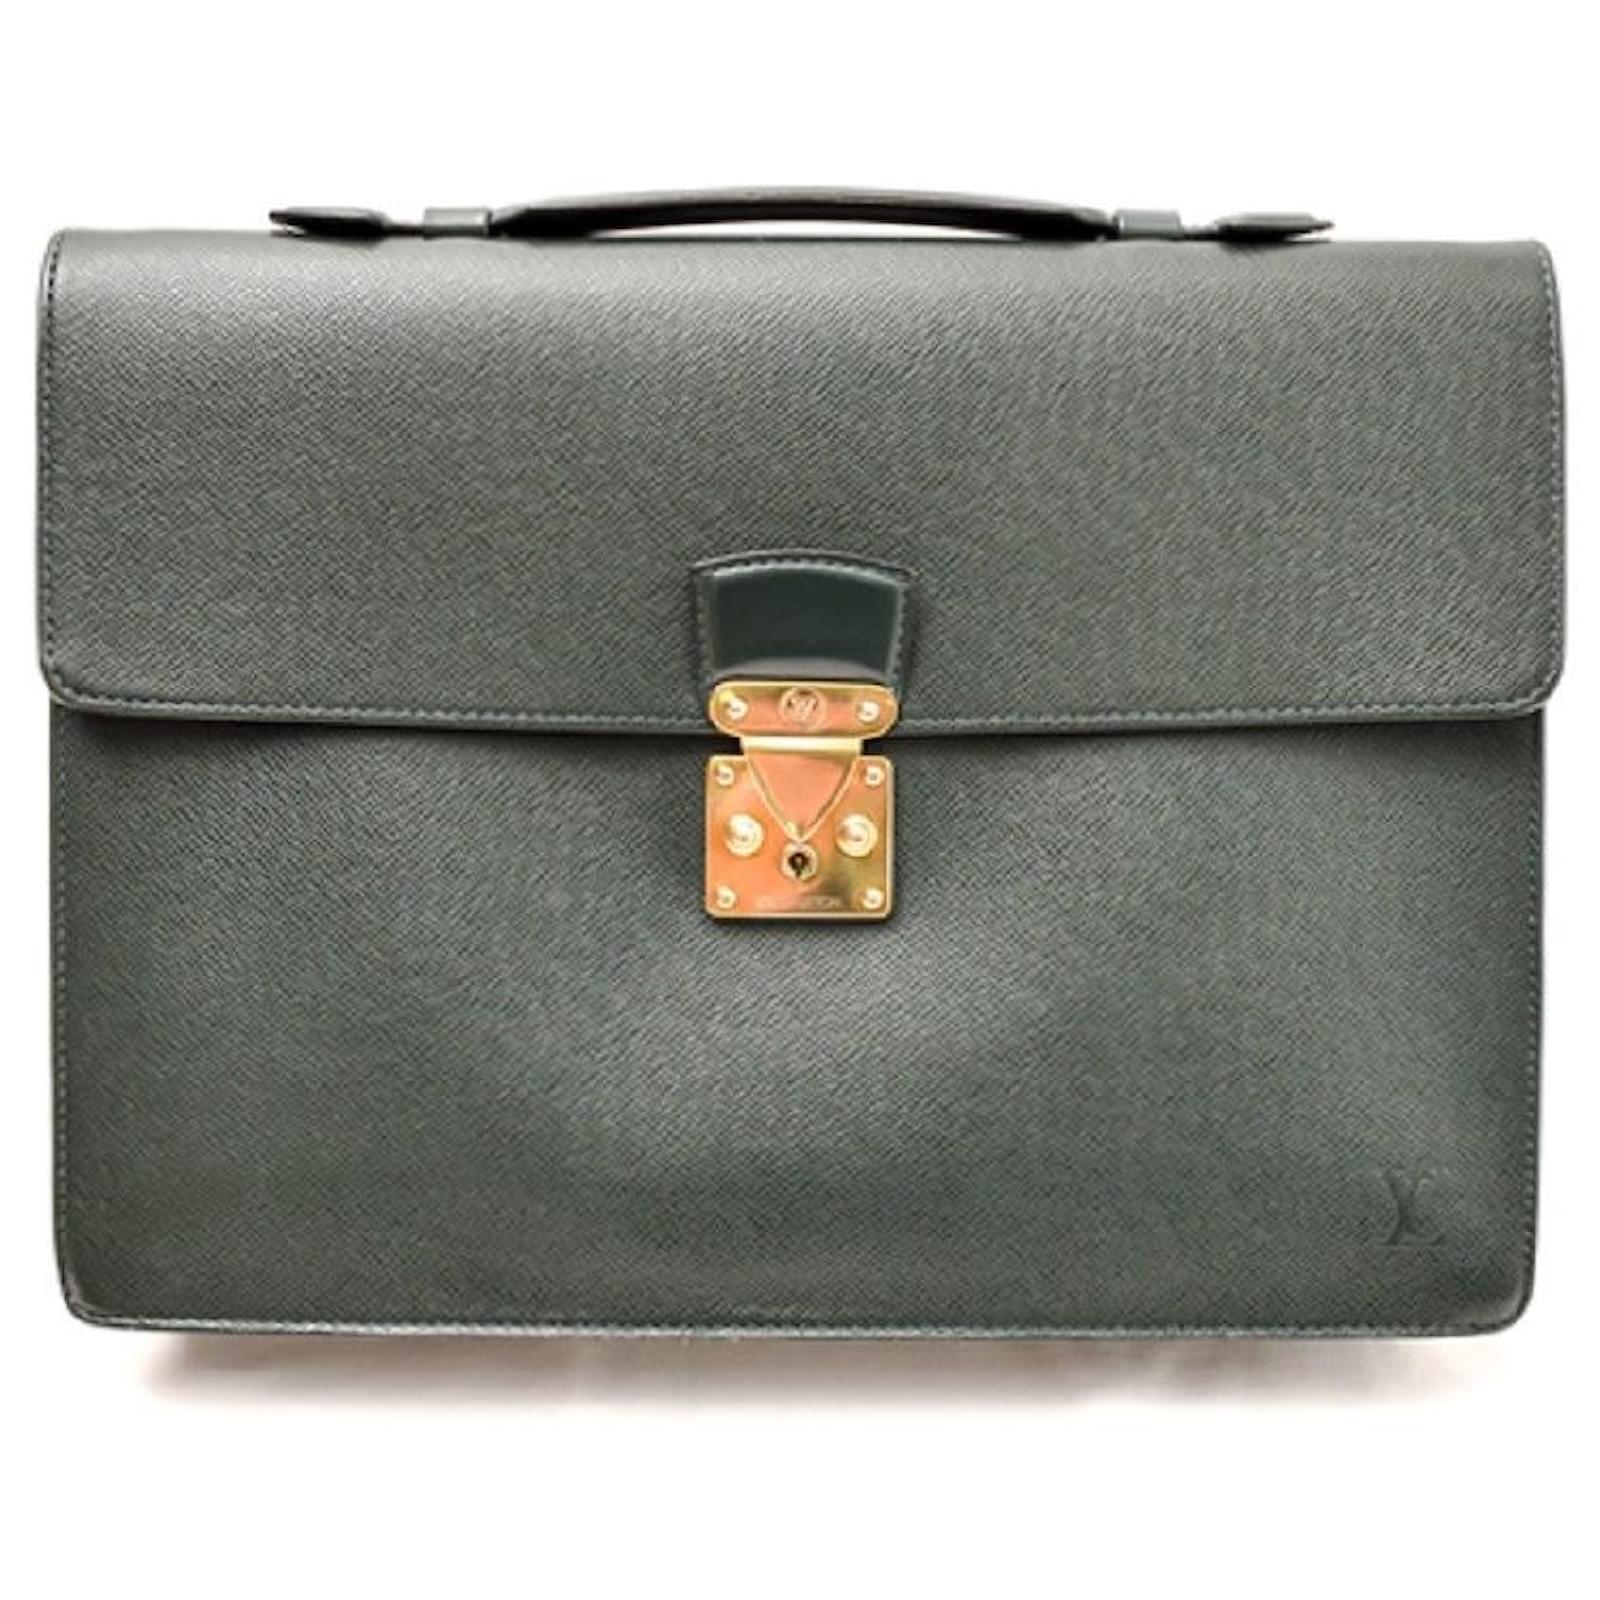 Shop Louis Vuitton Business & Briefcases (M30925) by